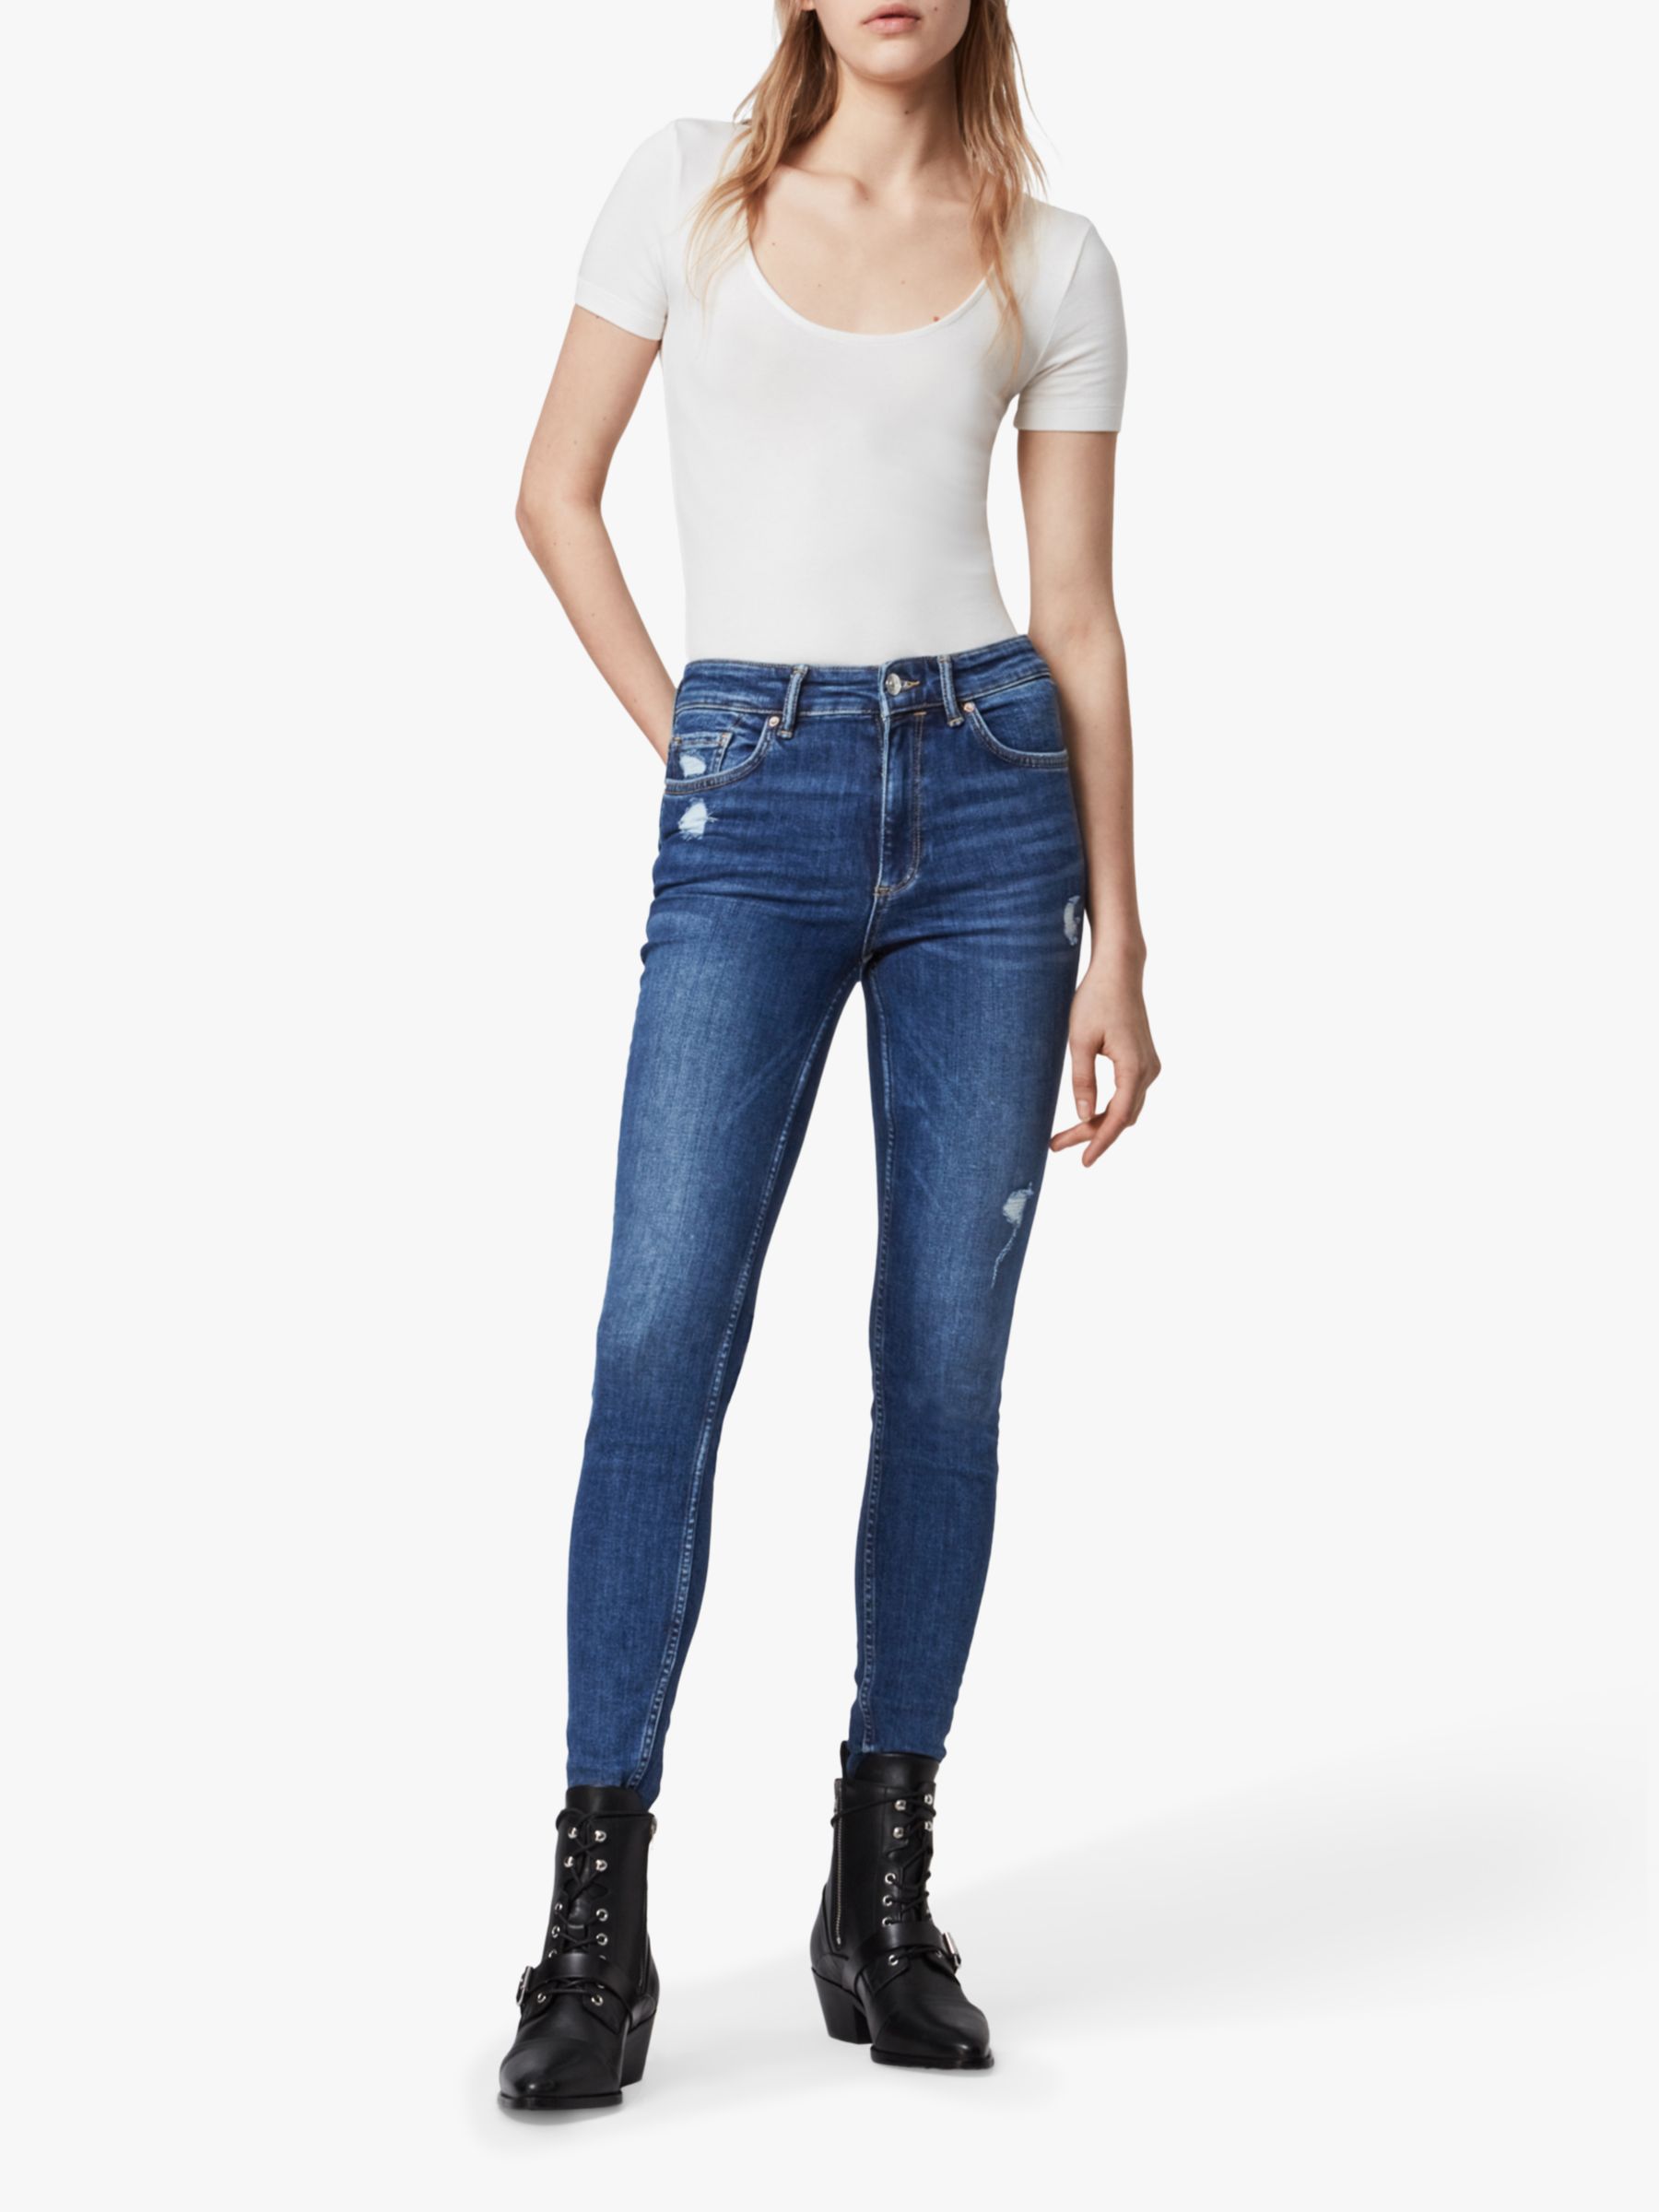 AllSaints Dax High Rise Skinny Jeans, Indigo Blue at John Lewis & Partners